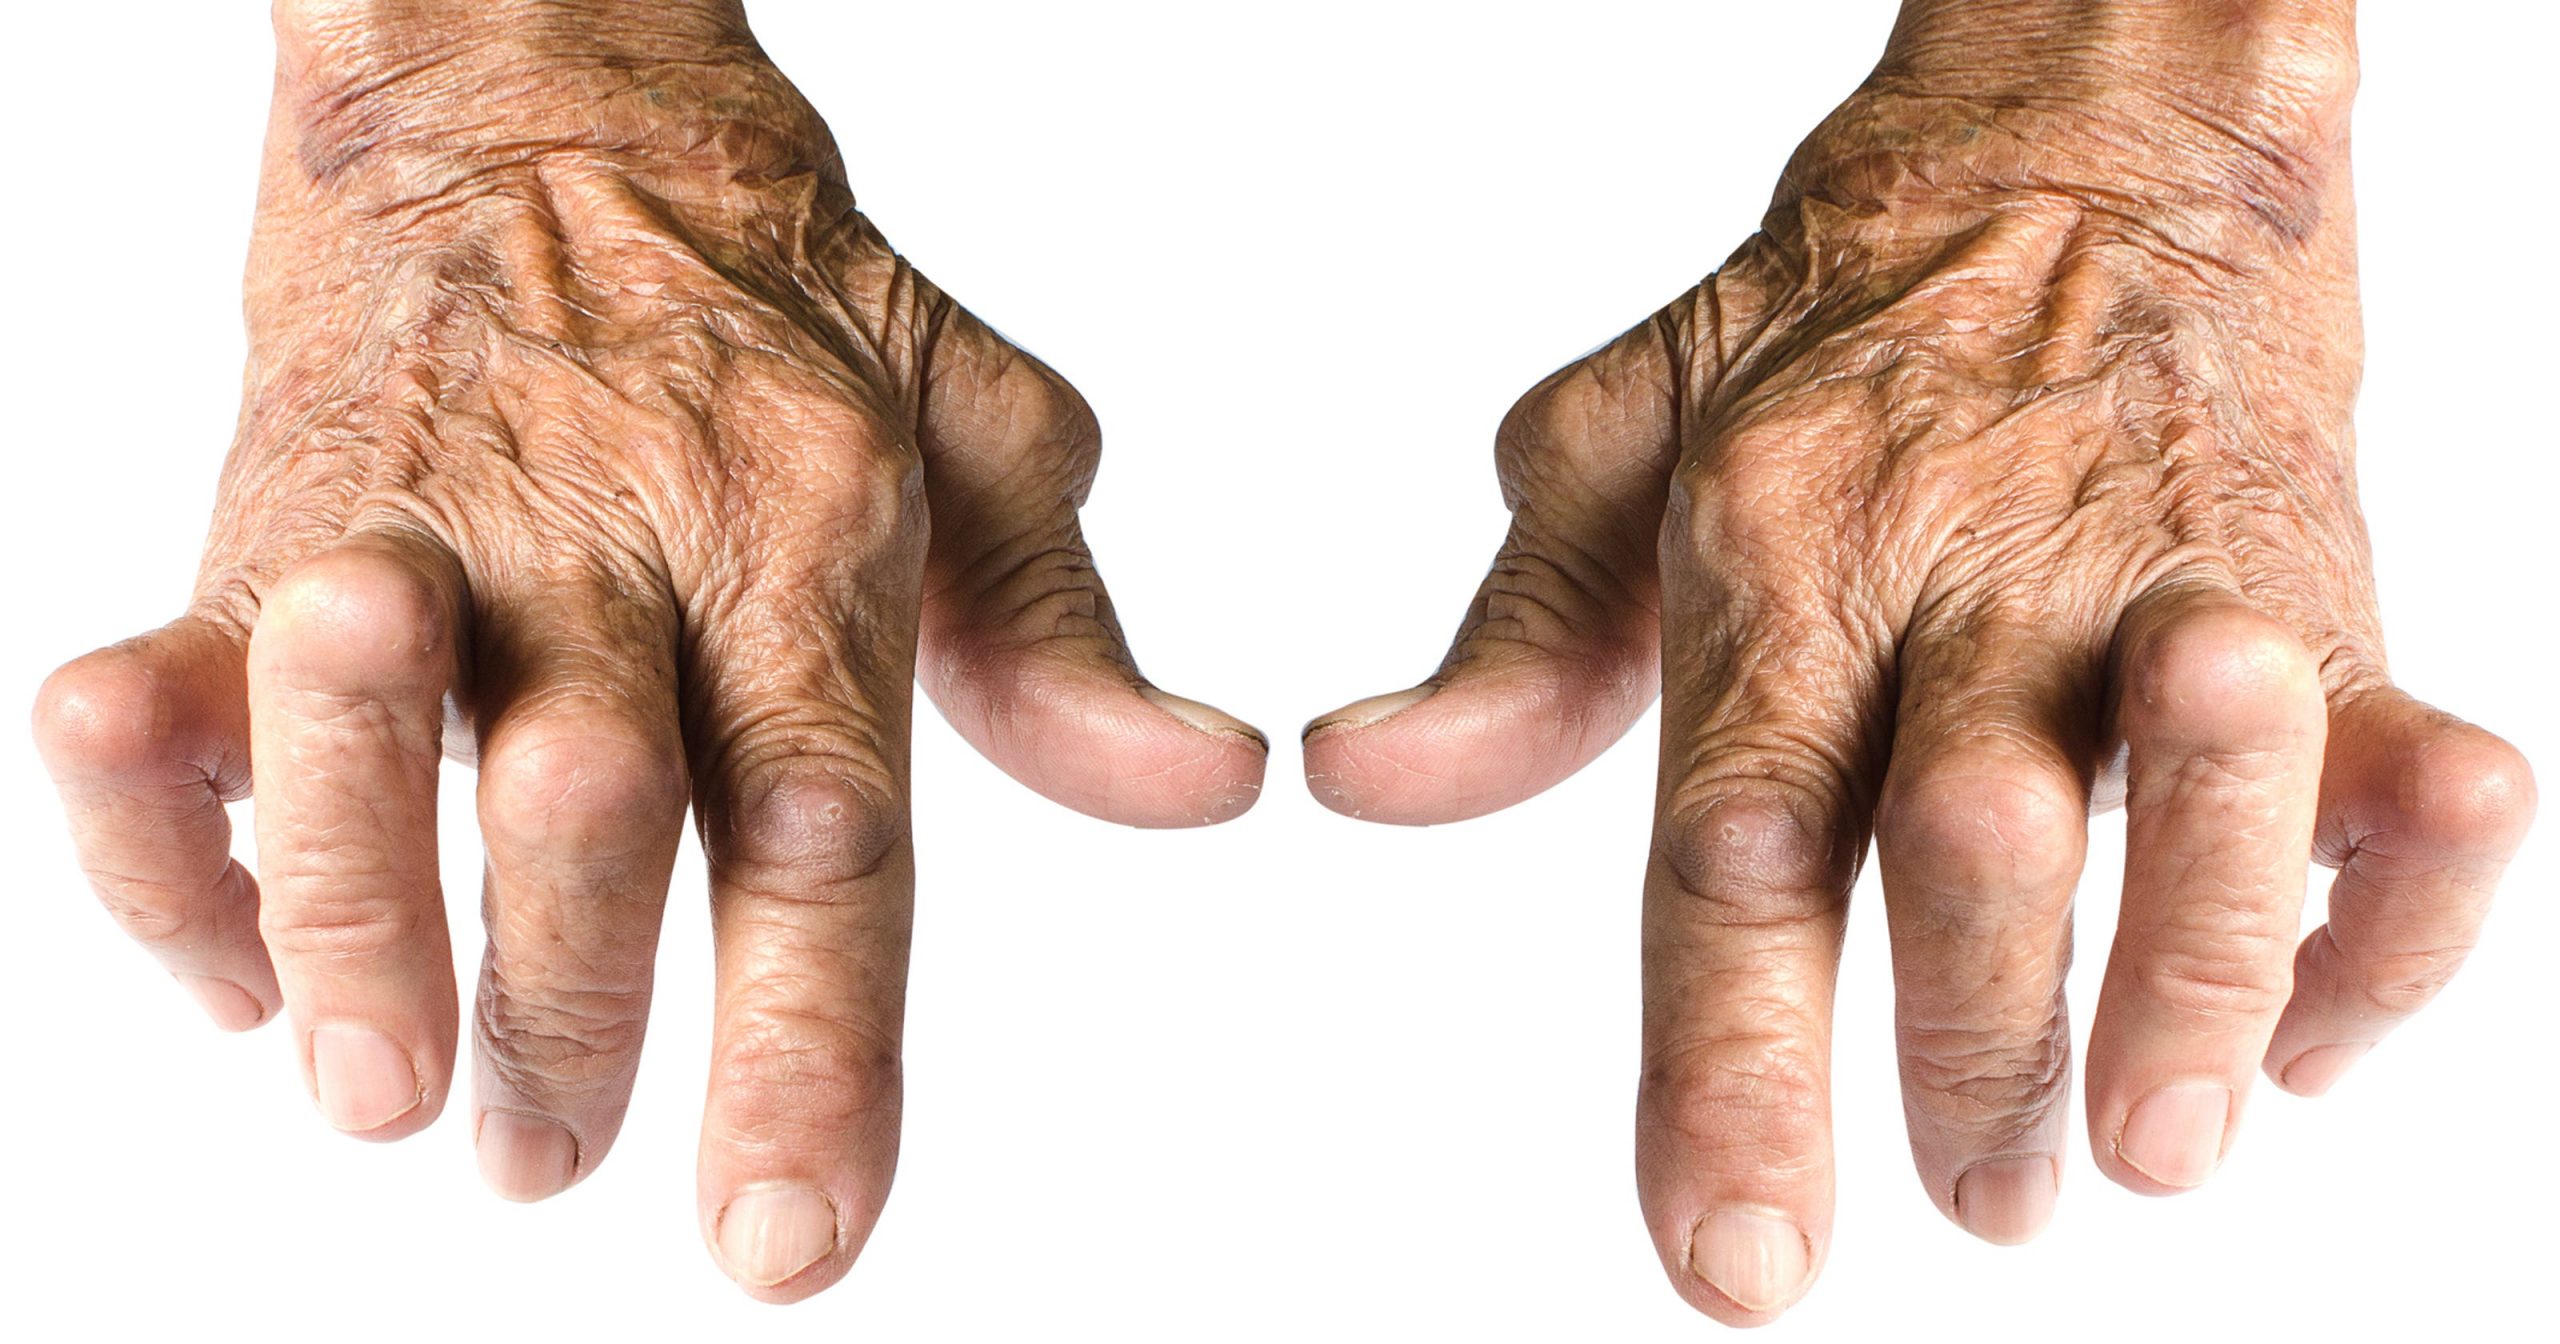 Over time, rheumatoid arthritis can lead to deformities